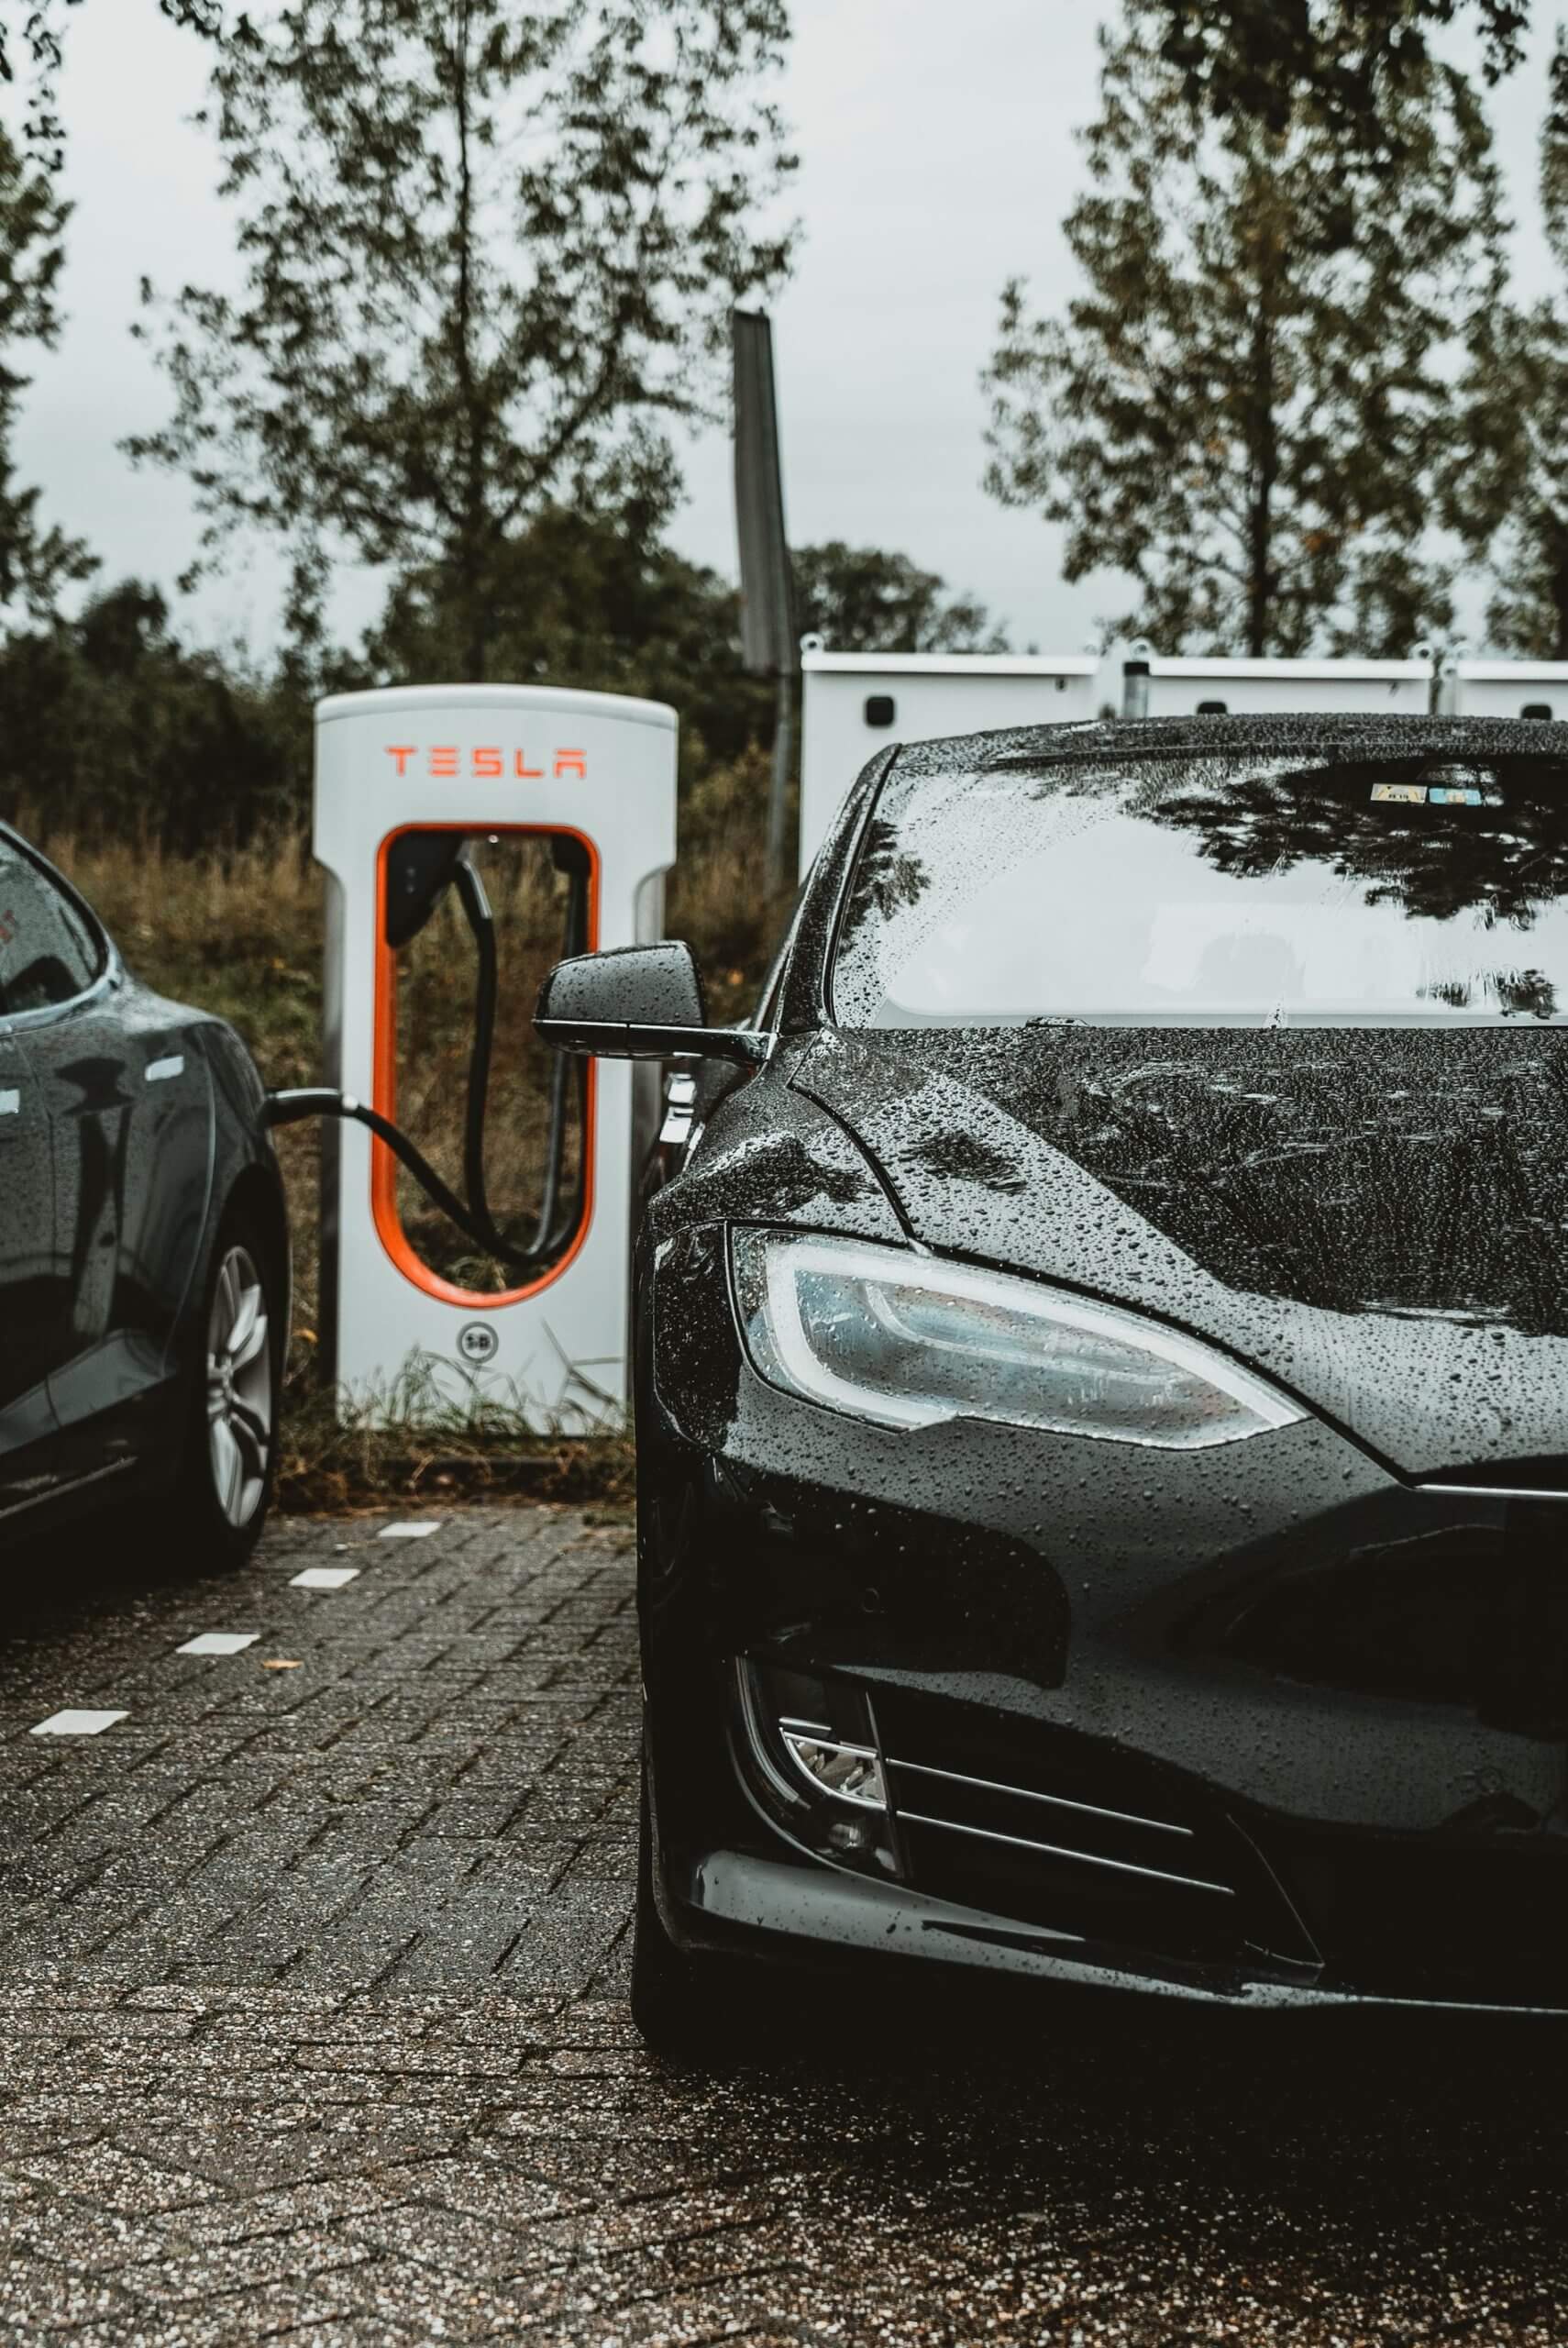 Two black Teslas at a charging station